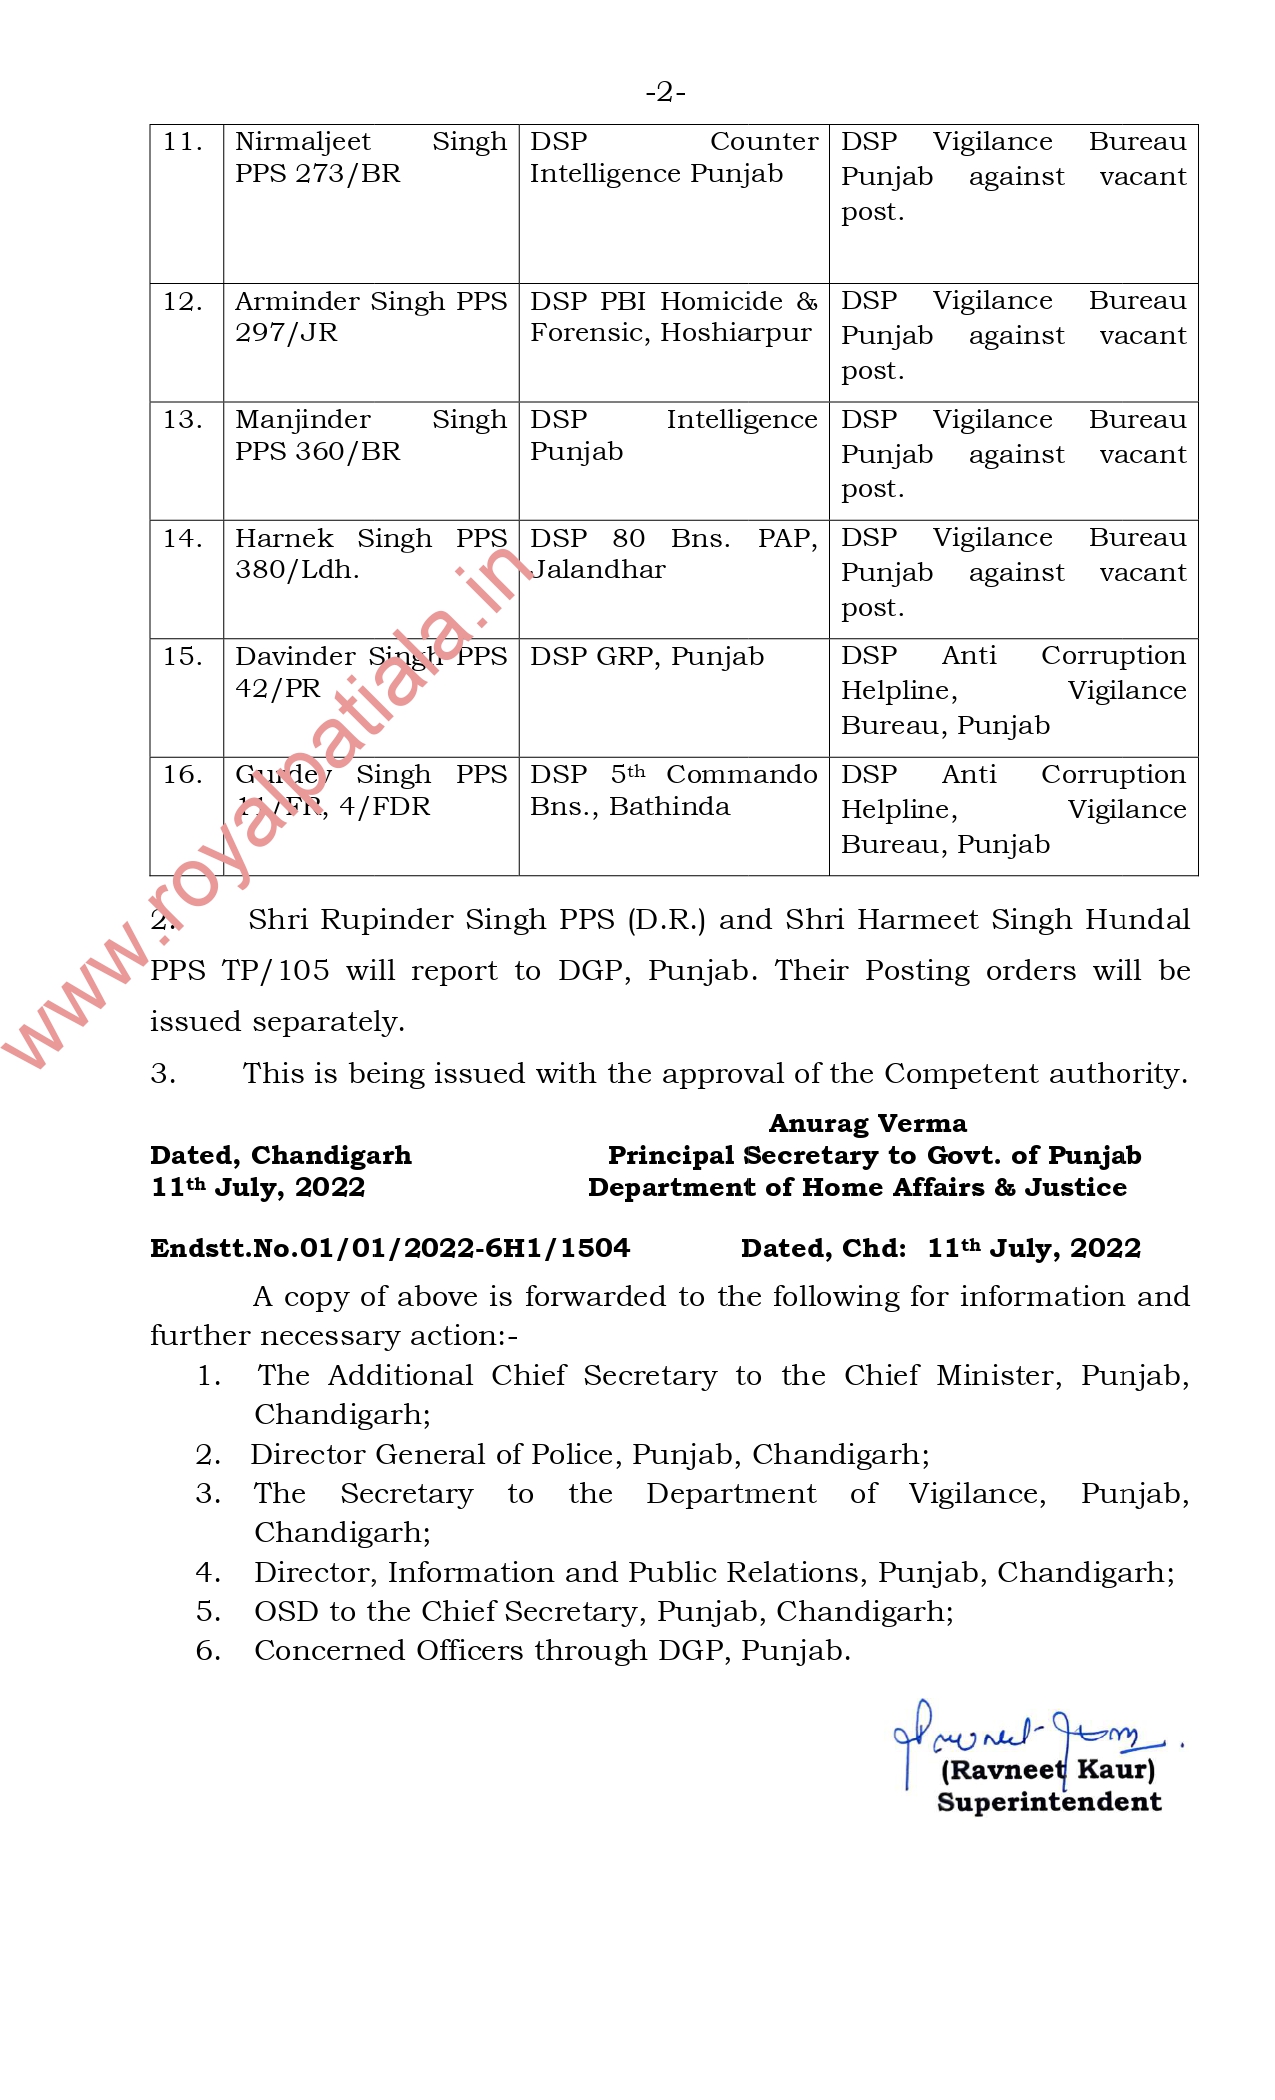 Punjab Vigilance Bureau transfers-16 officers transferred 